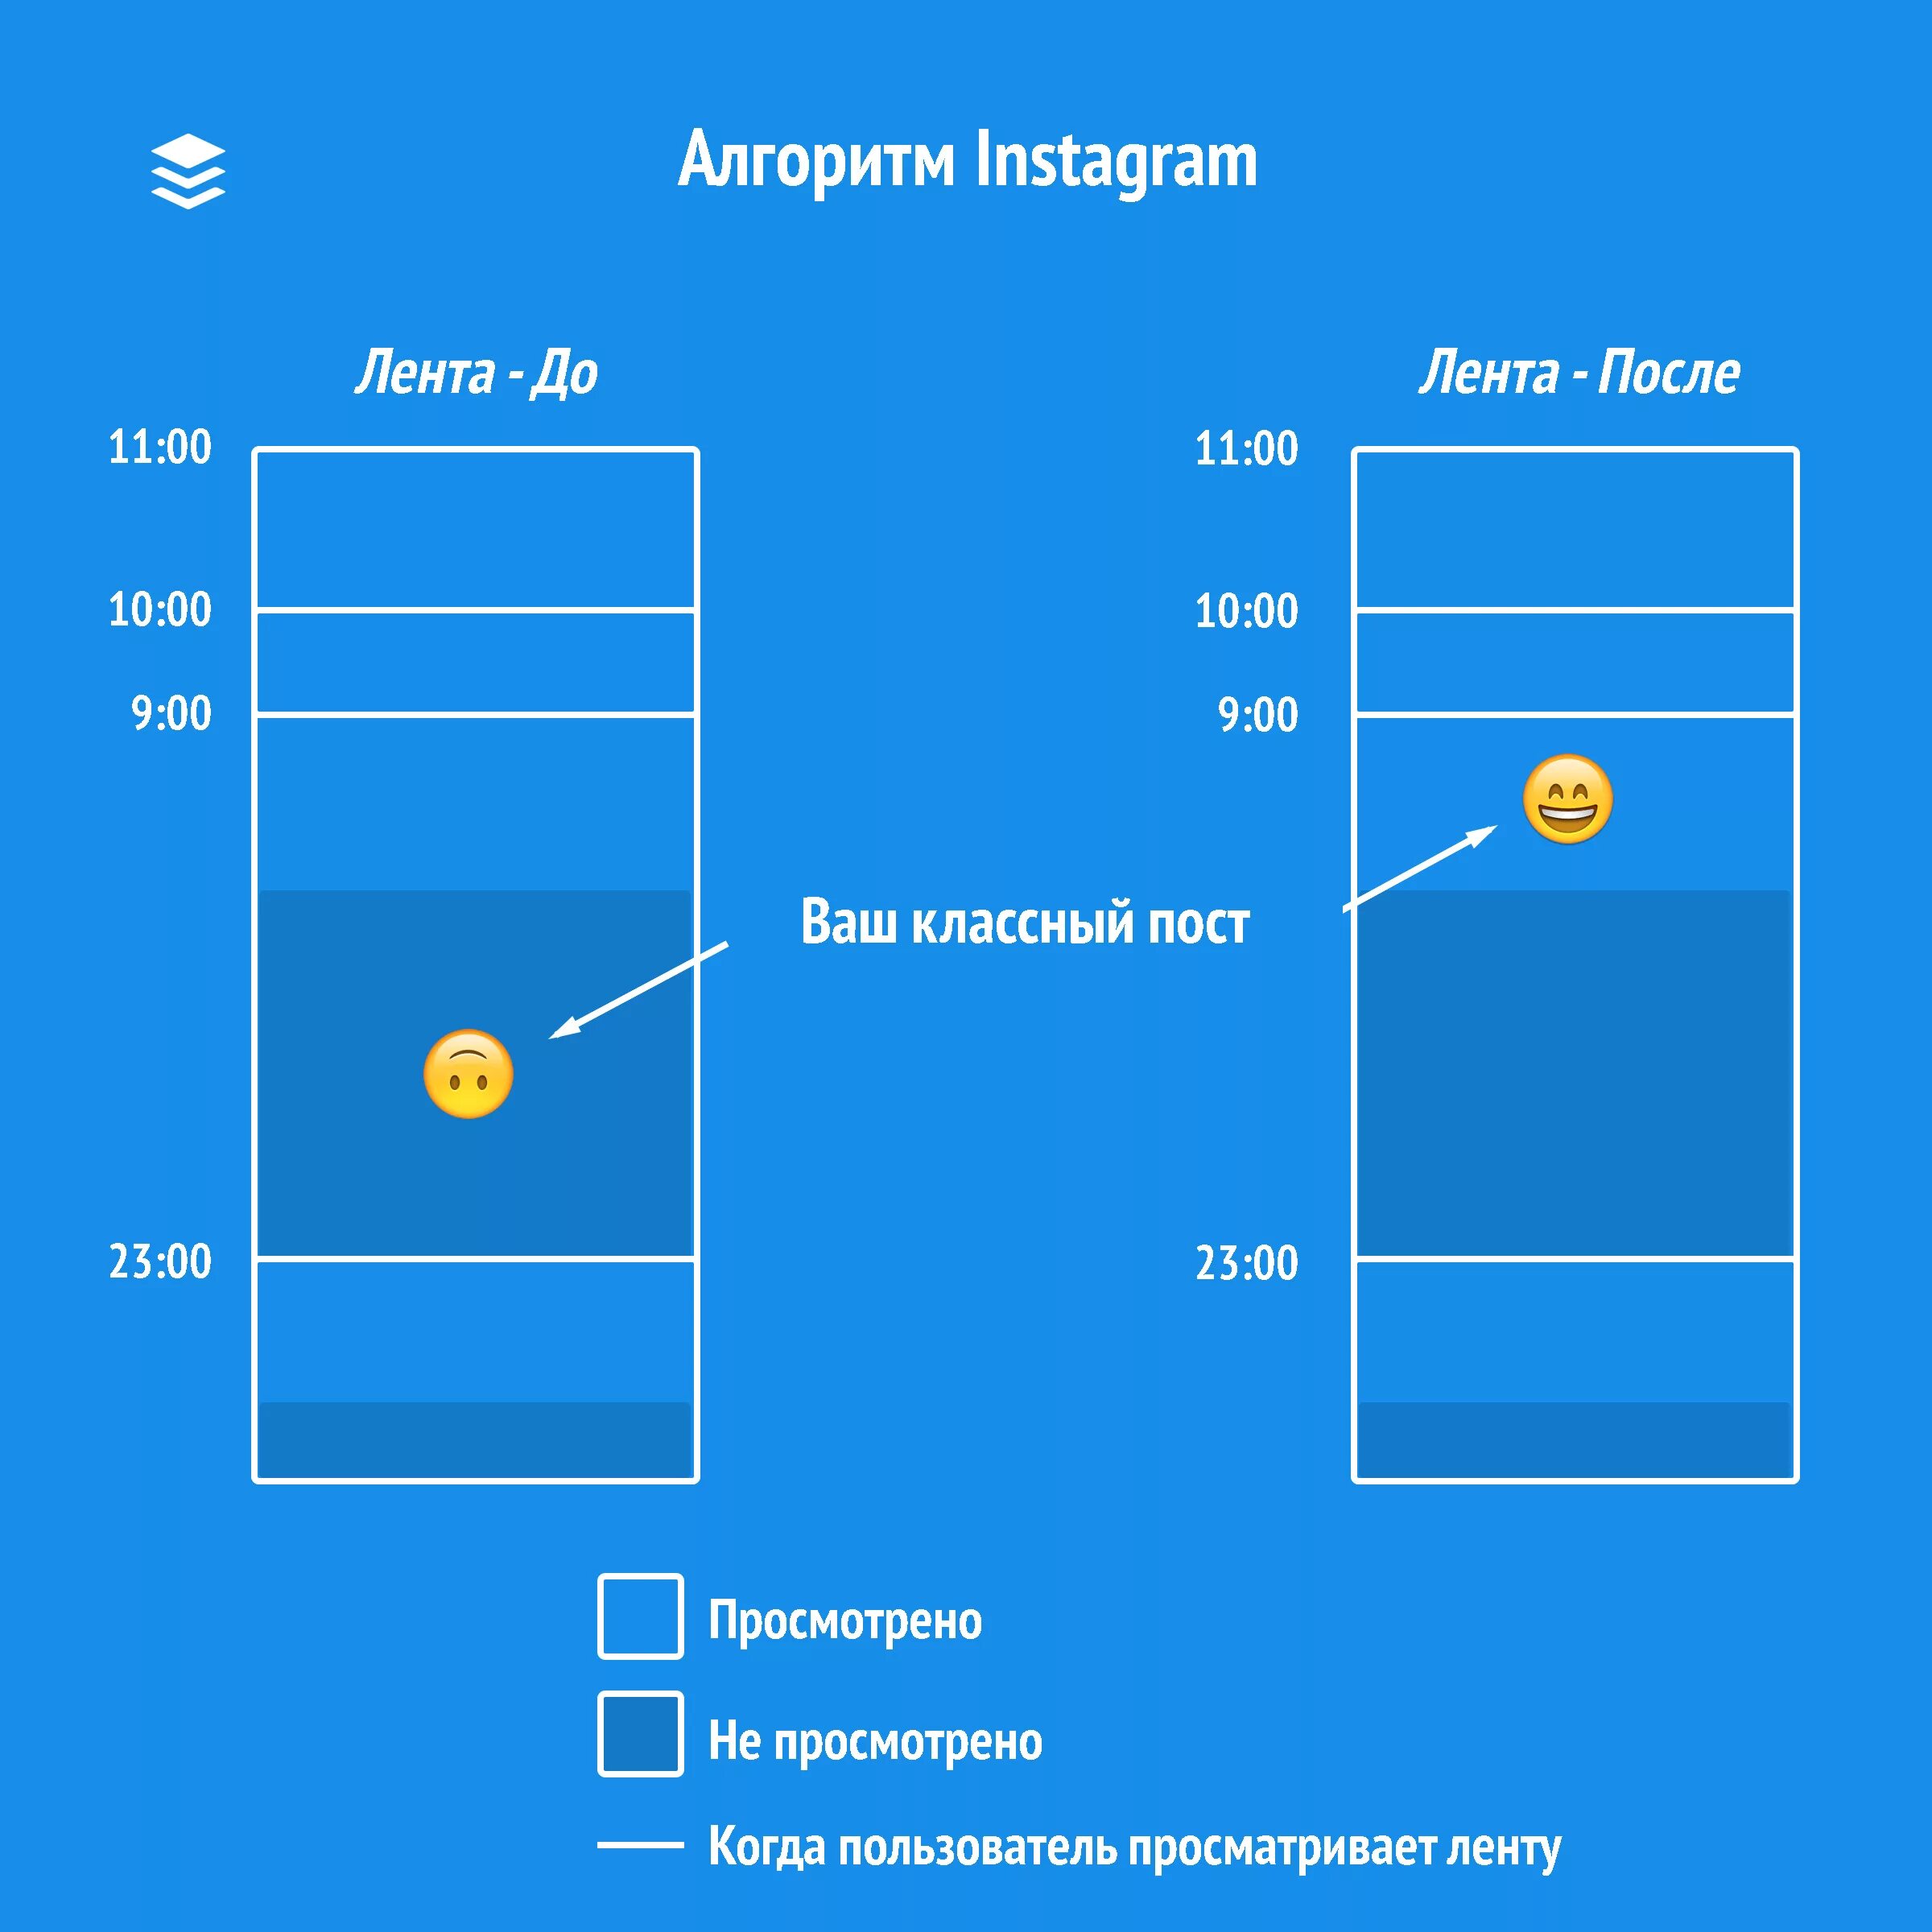 Алгоритмы инстаграмм. Алгоритмы Инстаграм. Алгоритм Instagram. Алгоритм ленты в Инстаграмм. Как работают алгоритмы Инстаграм.